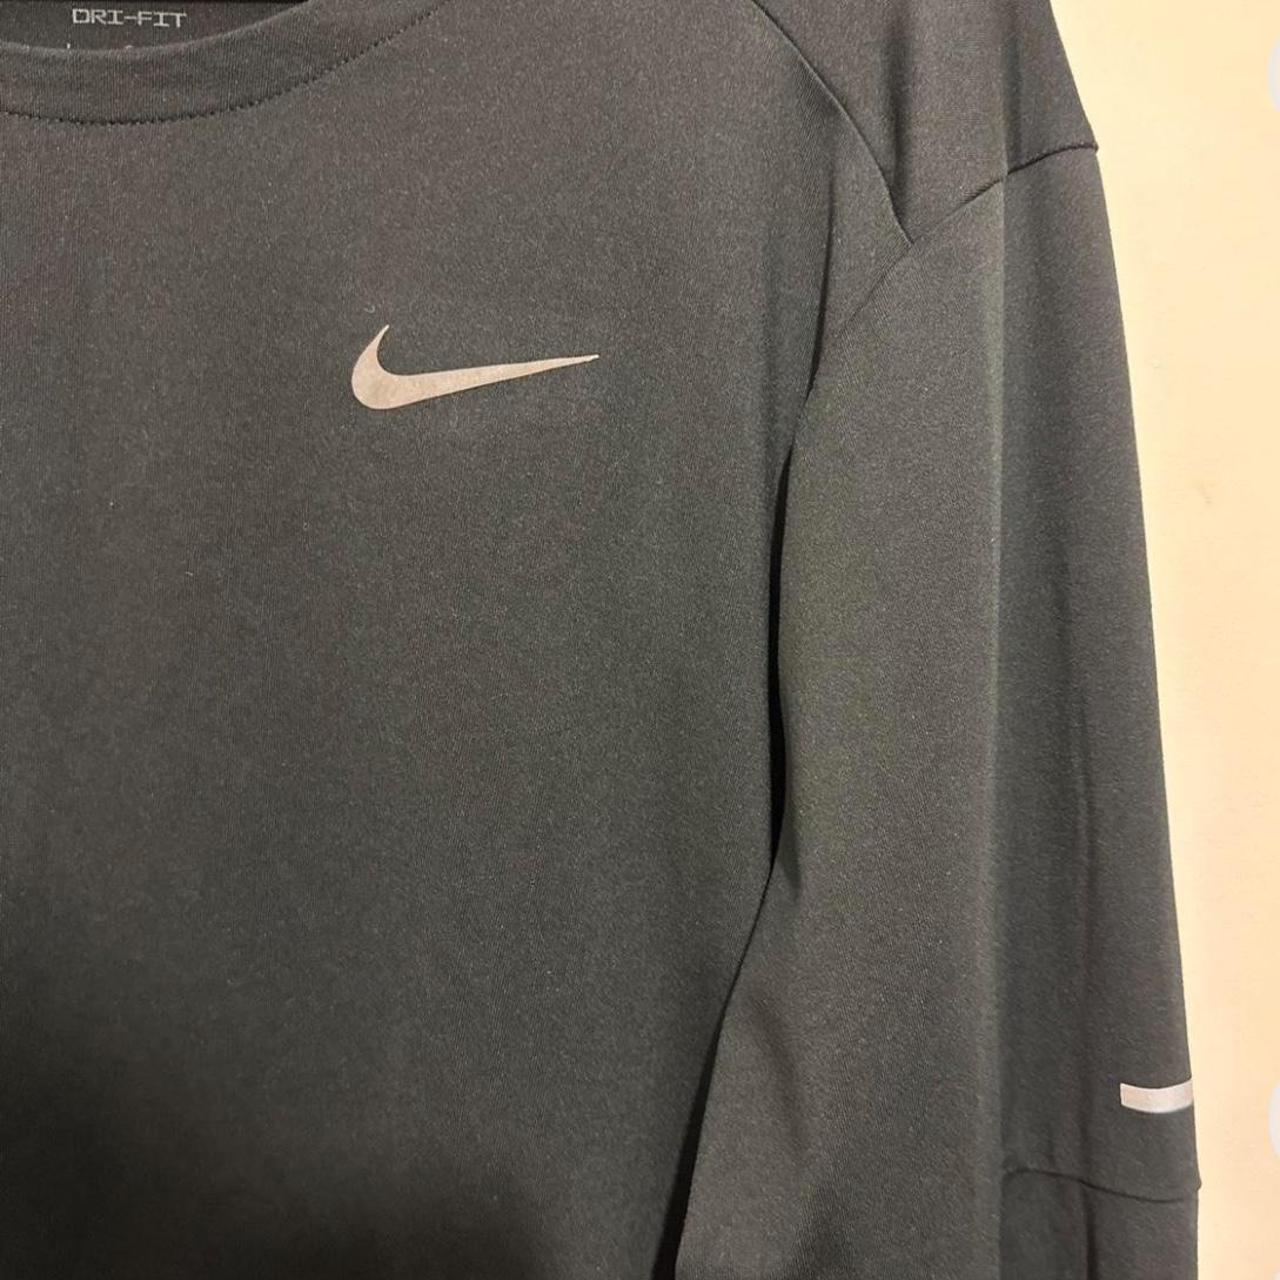 Nike Dri Fit Running Long Sleeved Top - Large - Depop